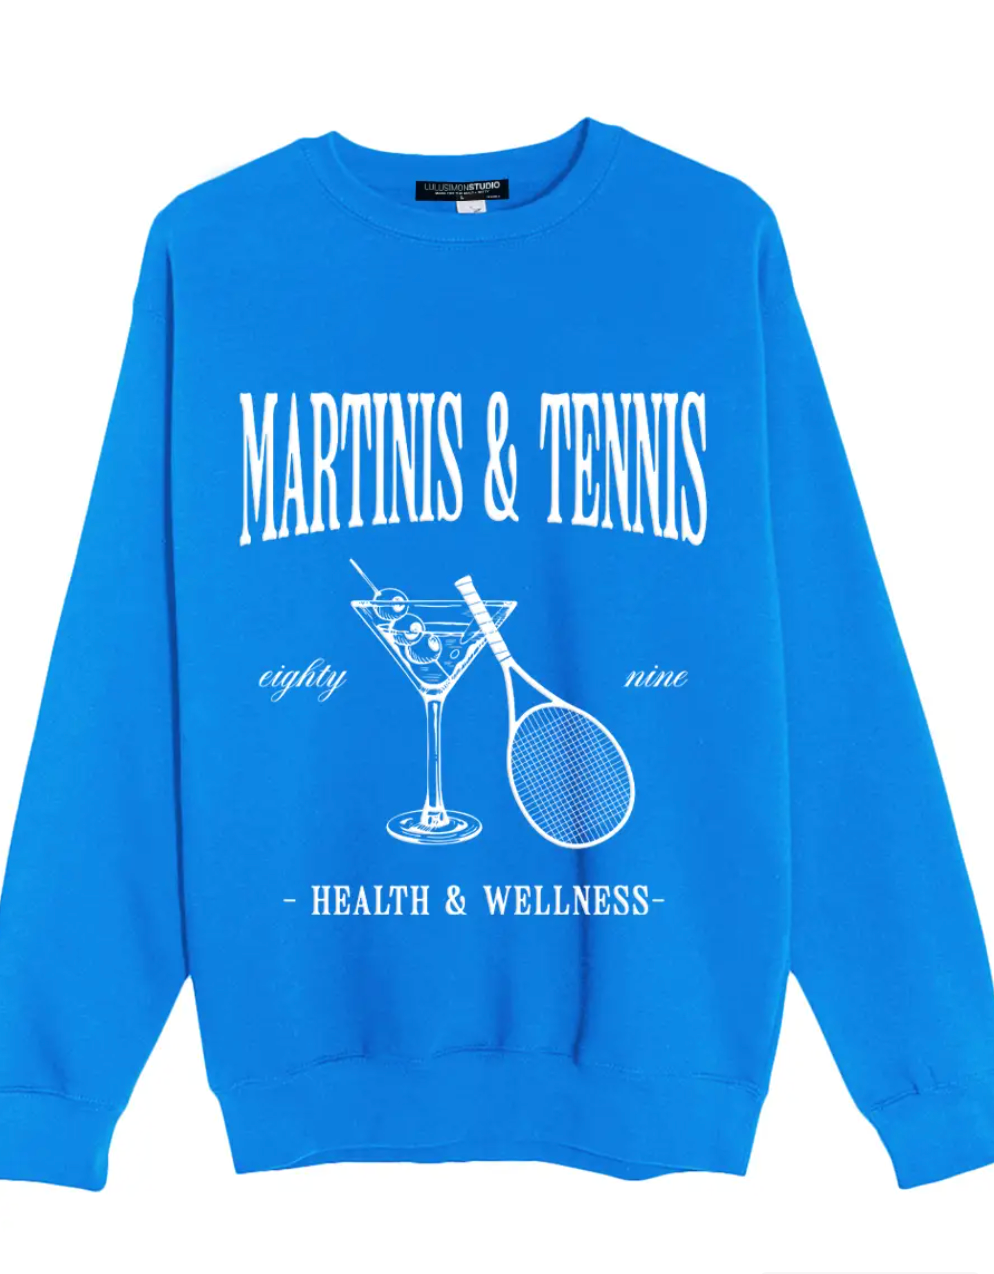 Martinis & Tennis Sweatshirt